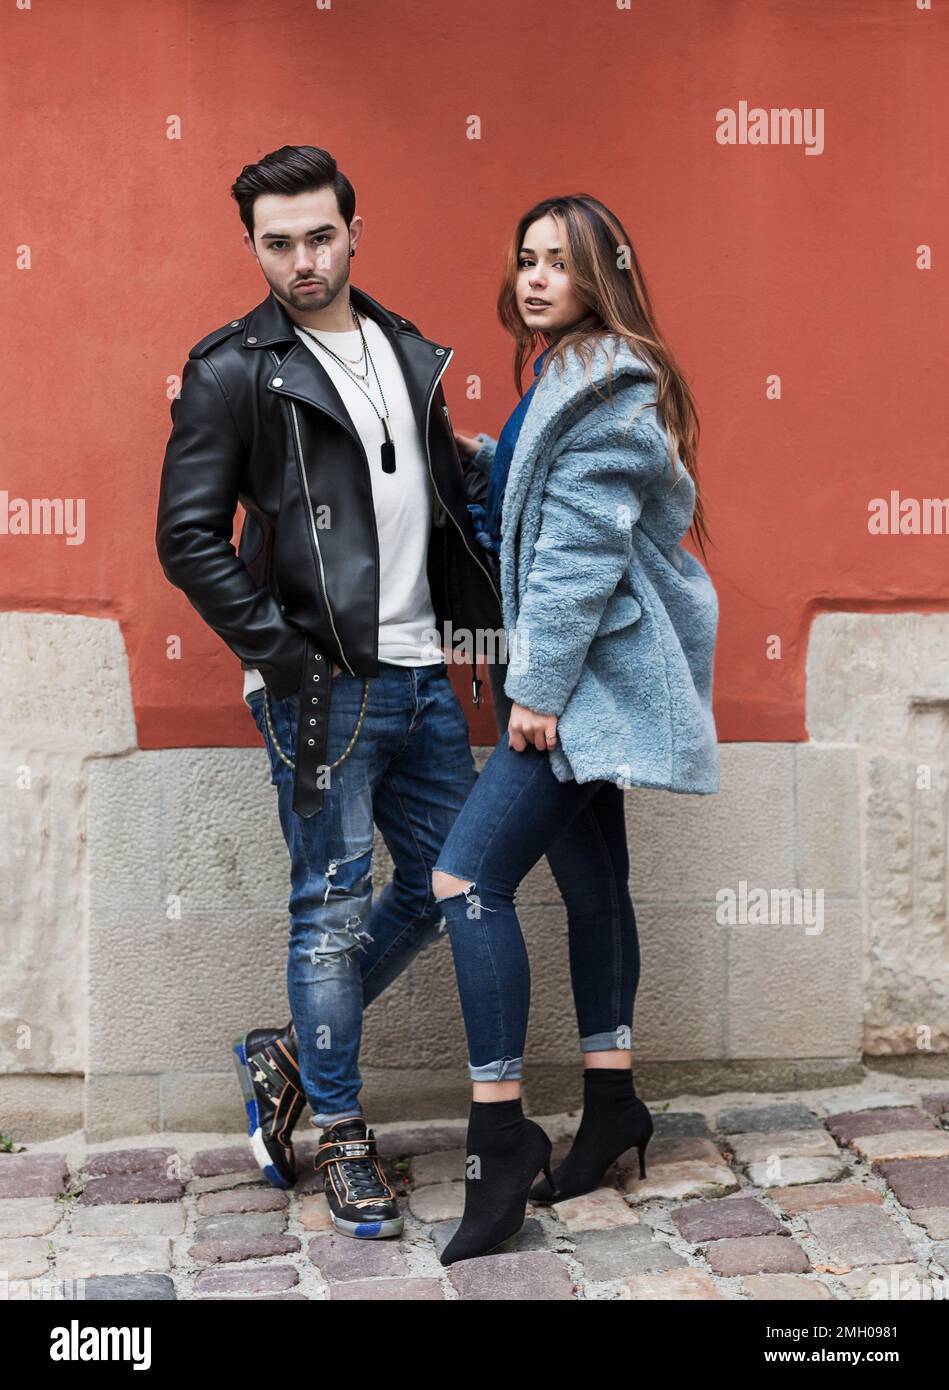 stylish happy couple enjoying a date on the street of a European city Stock Photo